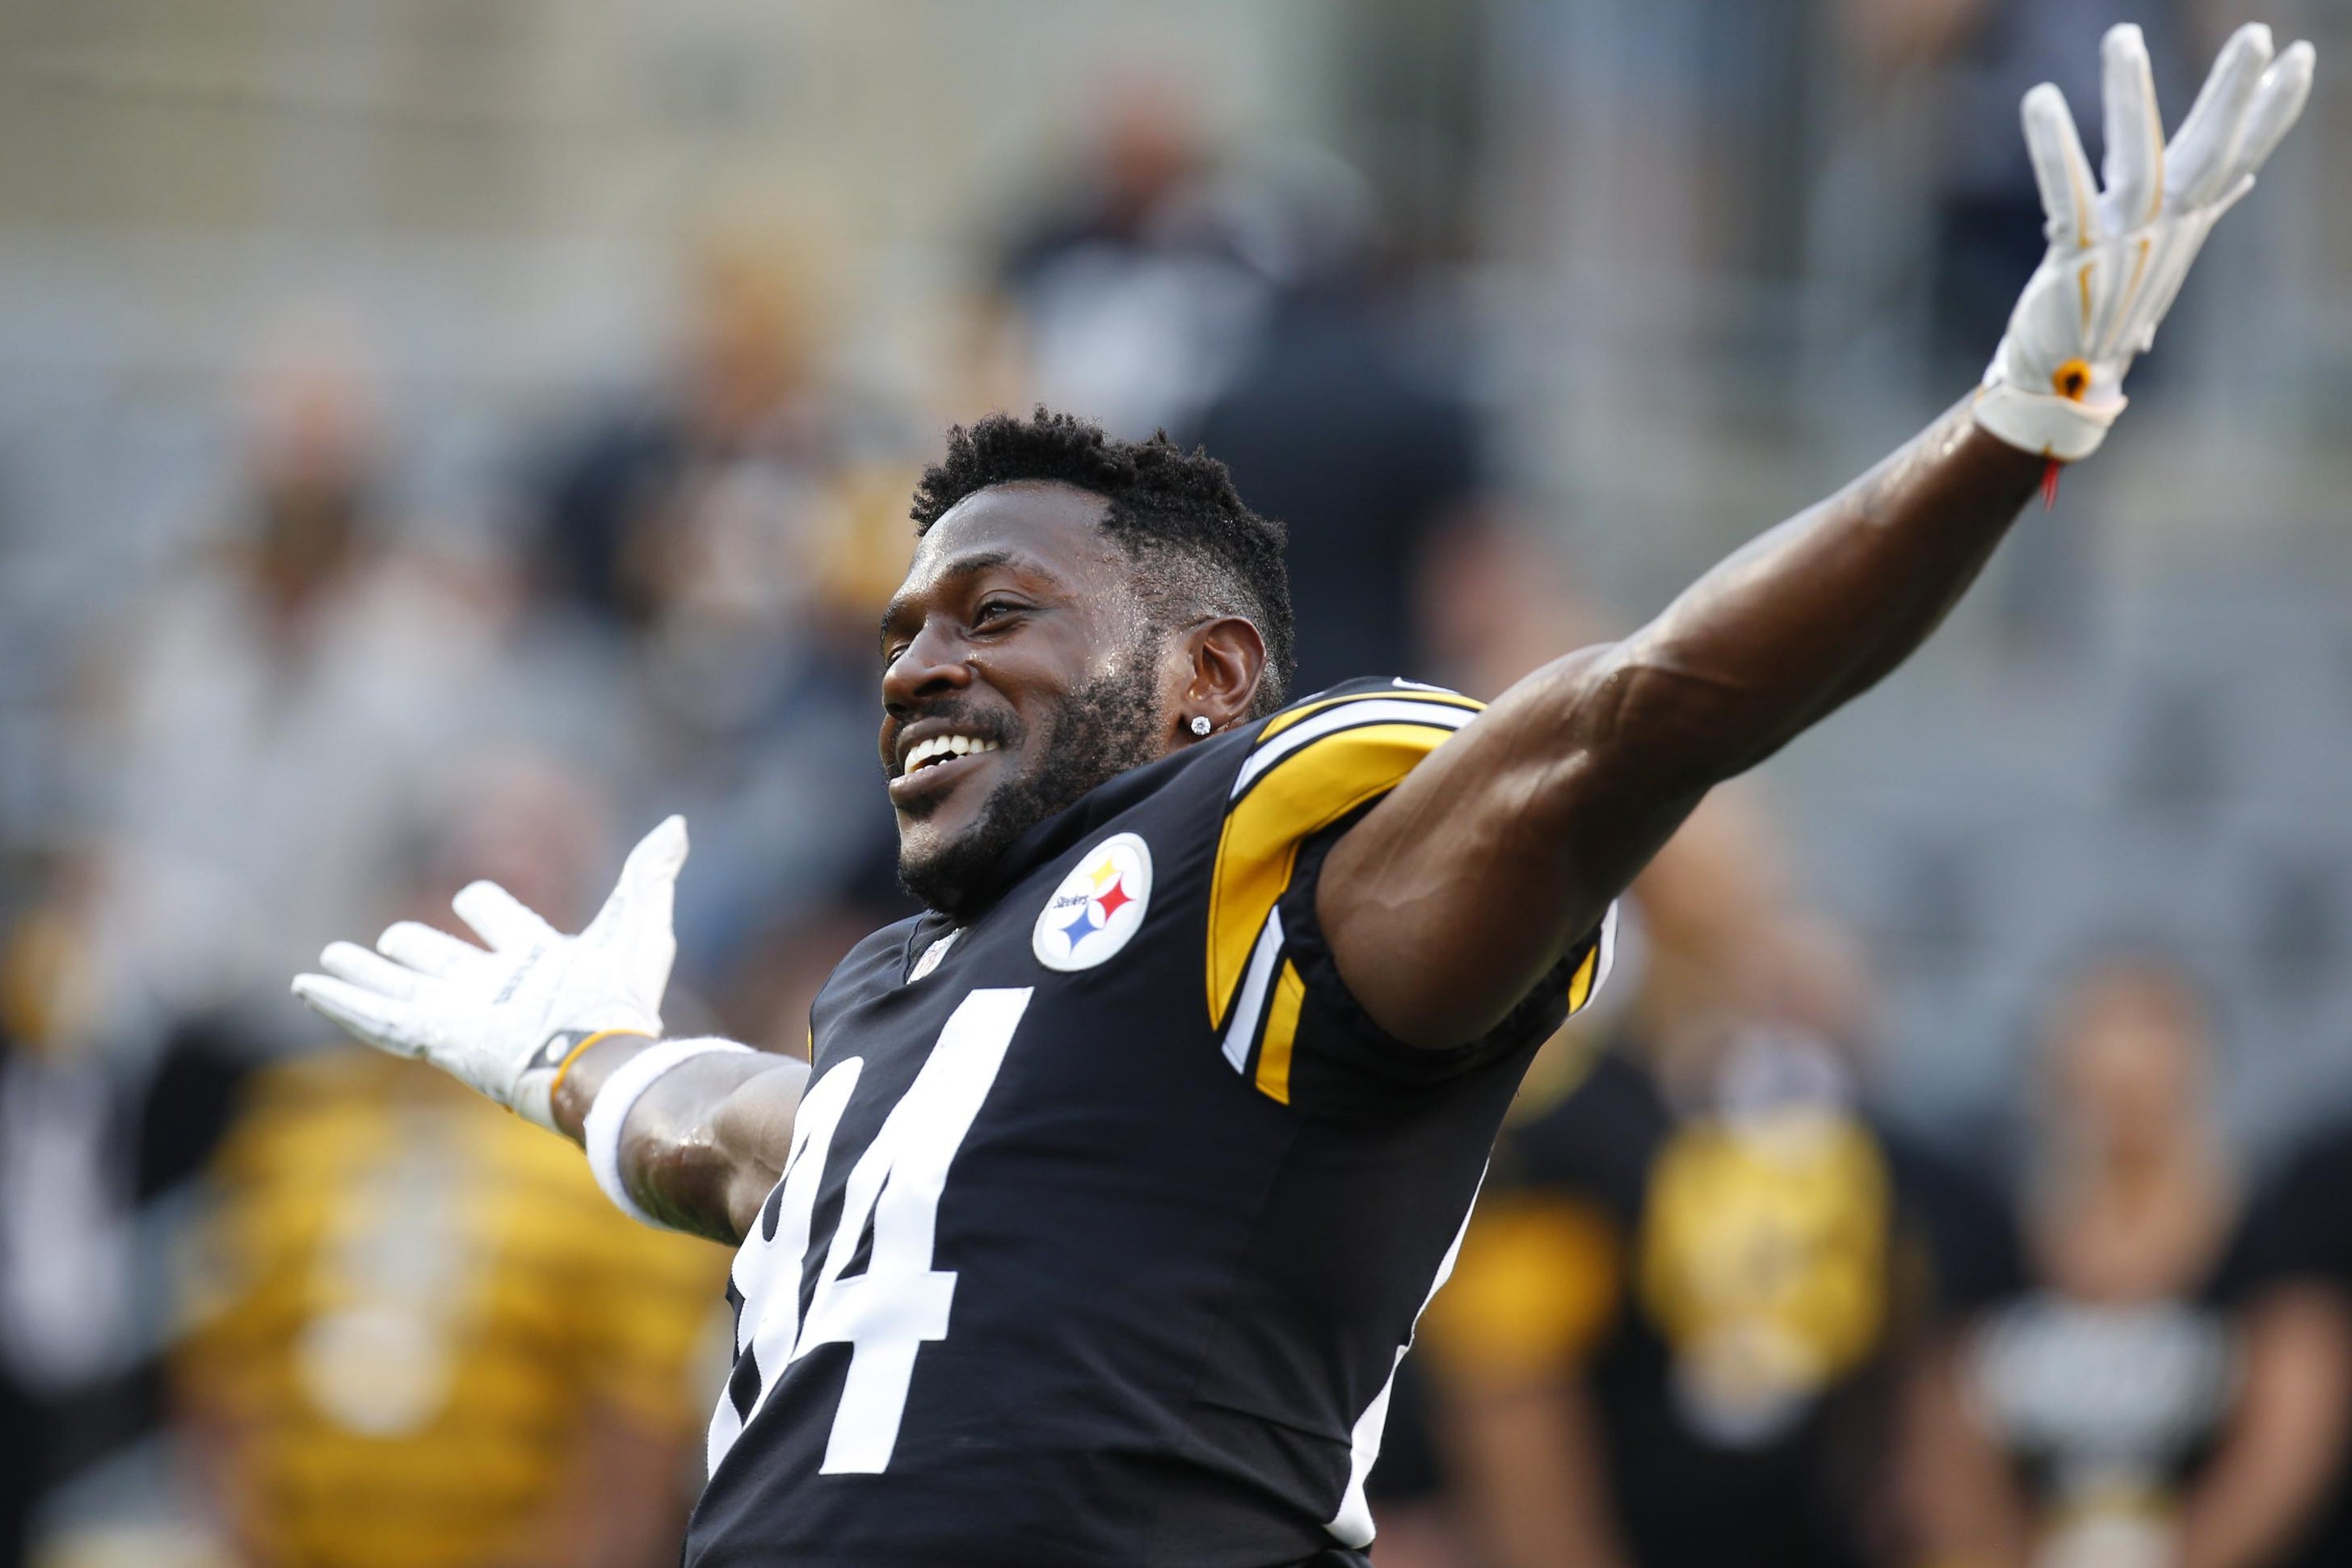 Antonio Brown Raiders: The Steelers trade away their star receiver.